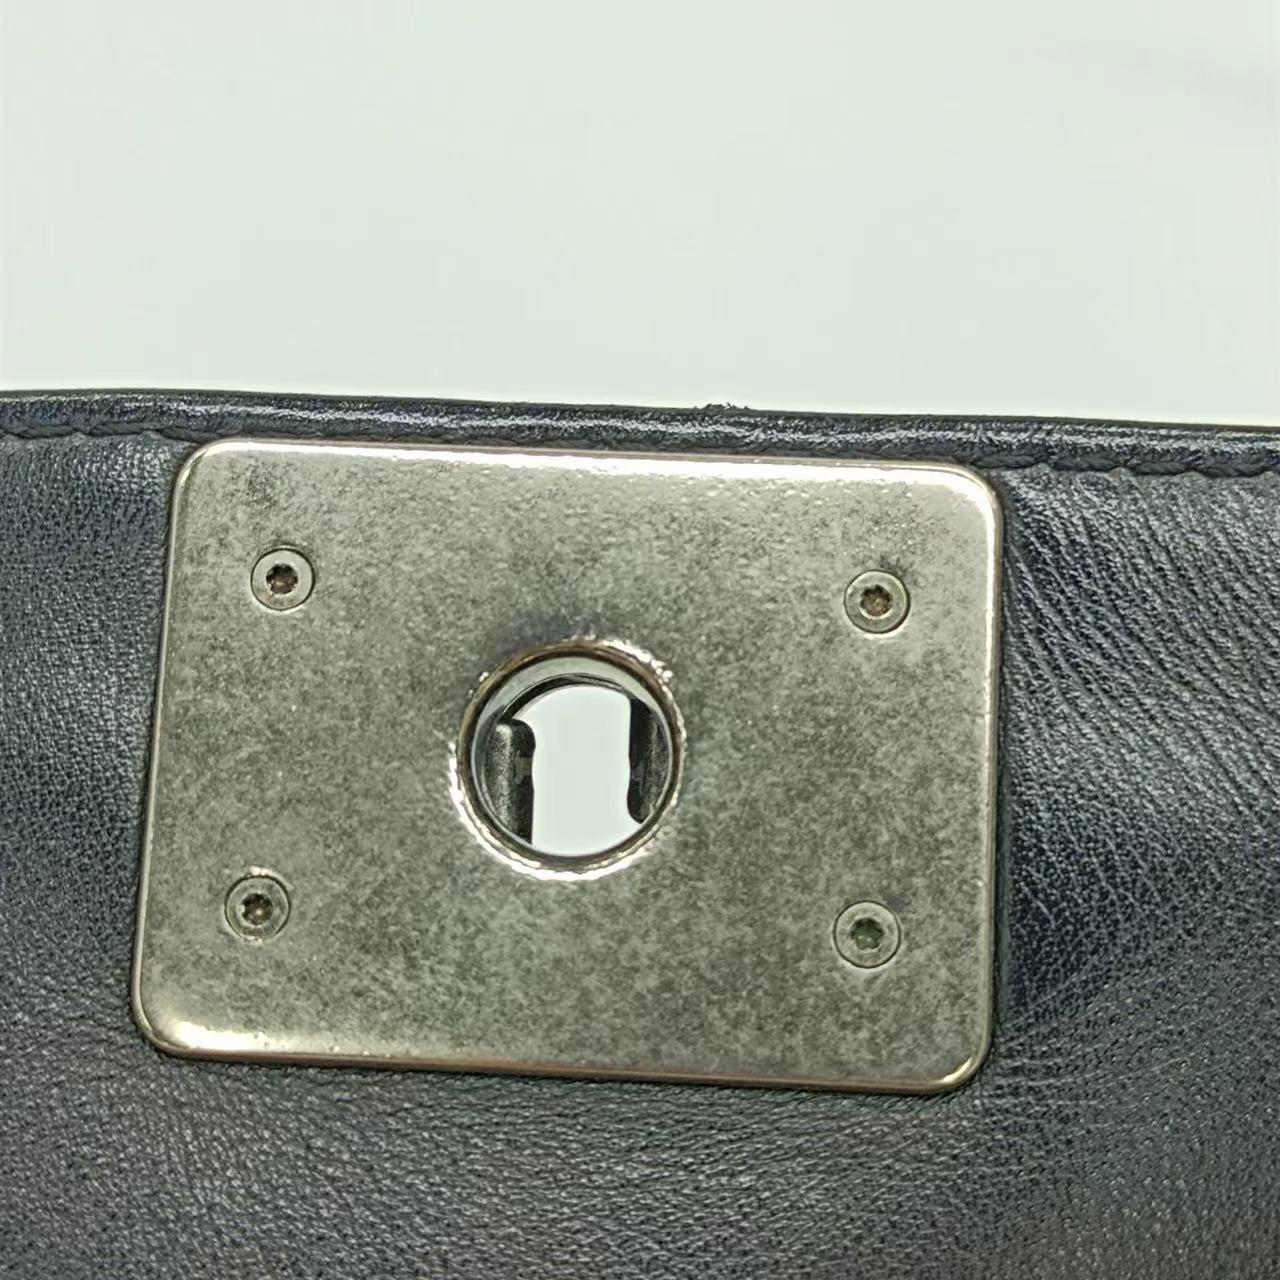 Chanel Enchained Boy Bag 2012 Black Leather Medium Flap Bag For Sale 8